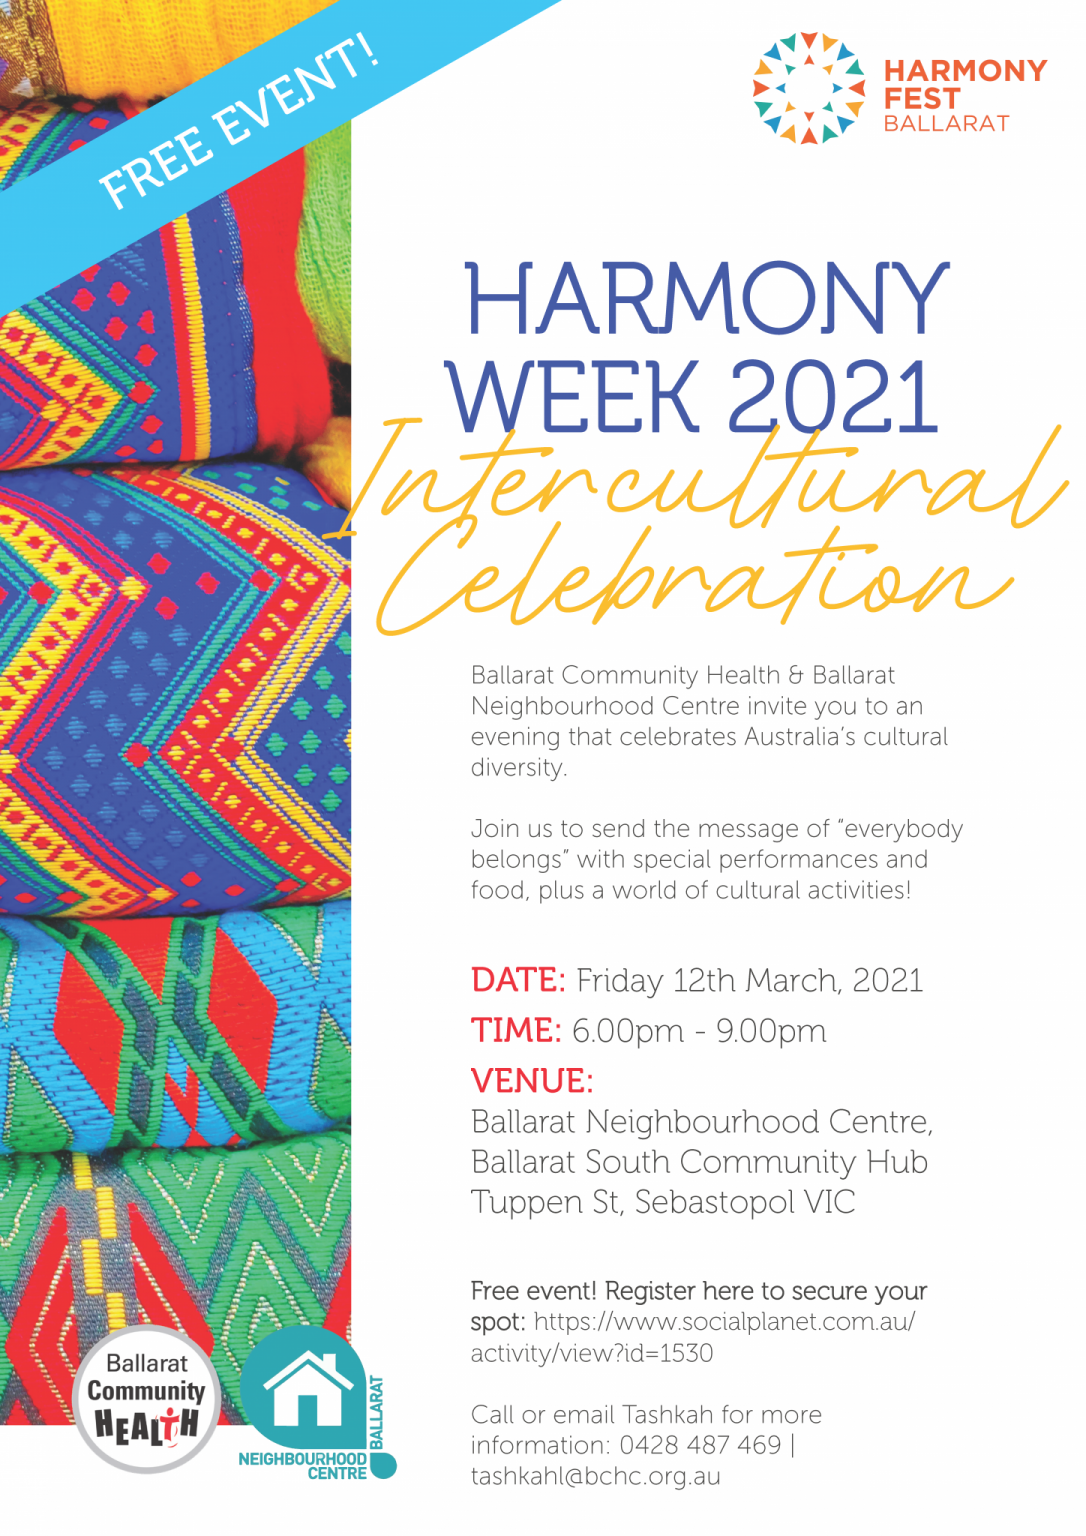 Save the date for Harmony Week 2021! Ballarat Community Health